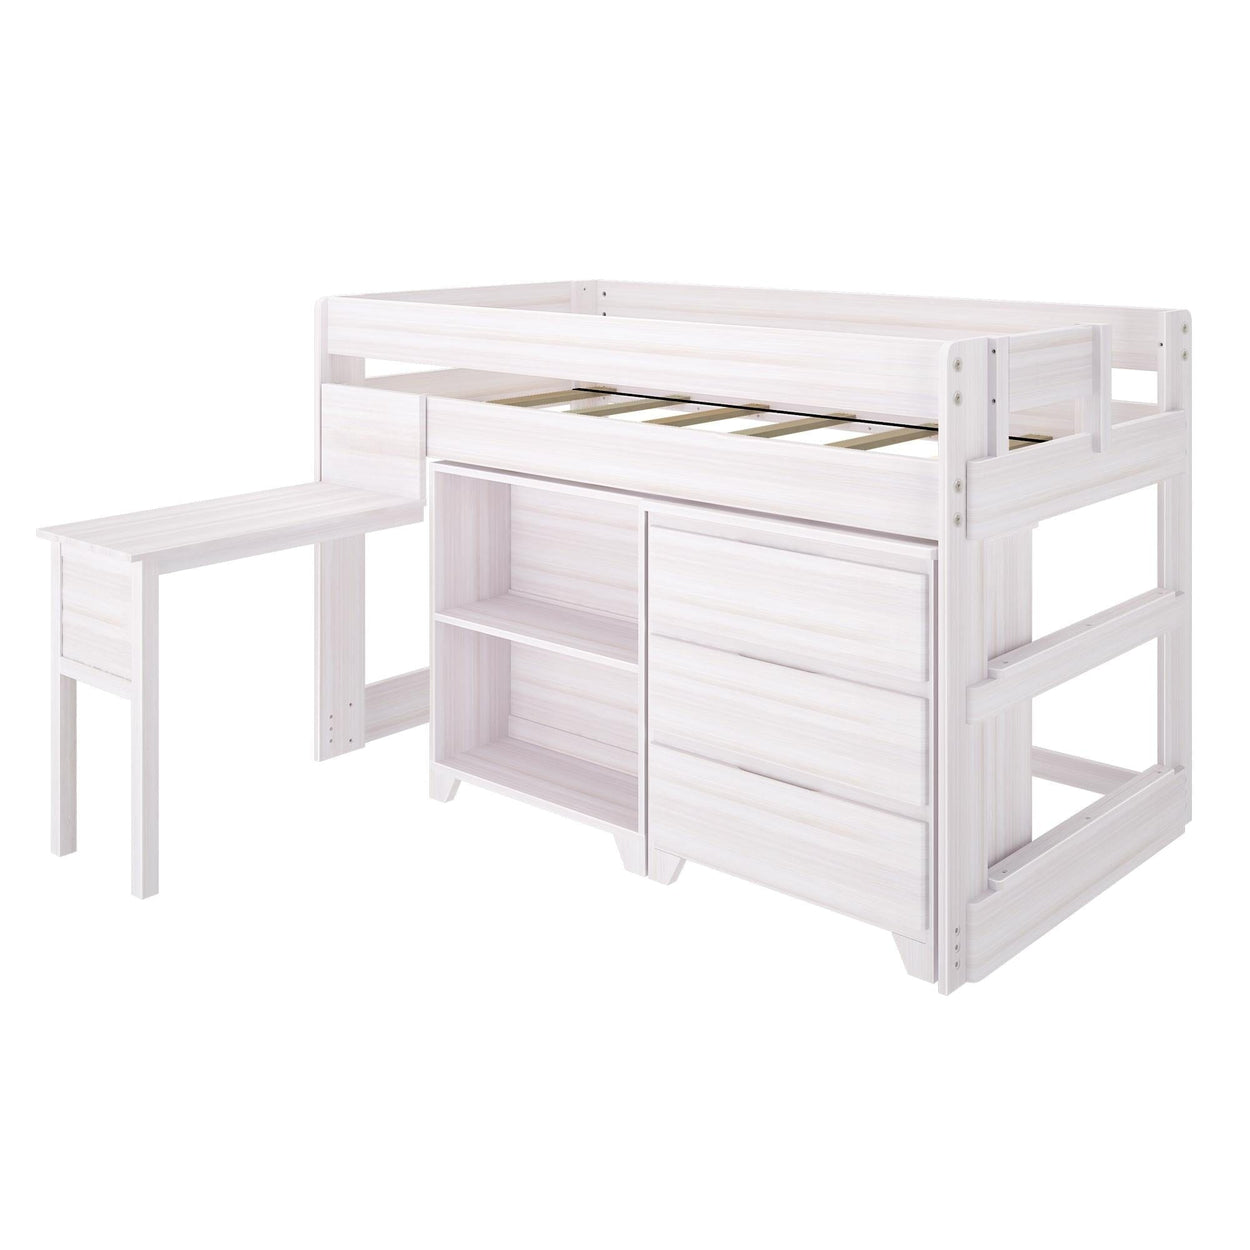 19-3D2BDK-182 : Storage & Study Loft Beds Farmhouse Twin-Size Low Loft with 3-Drawer Dresser, 2-Shelf Bookcase and Hook-on Desk, White Wash